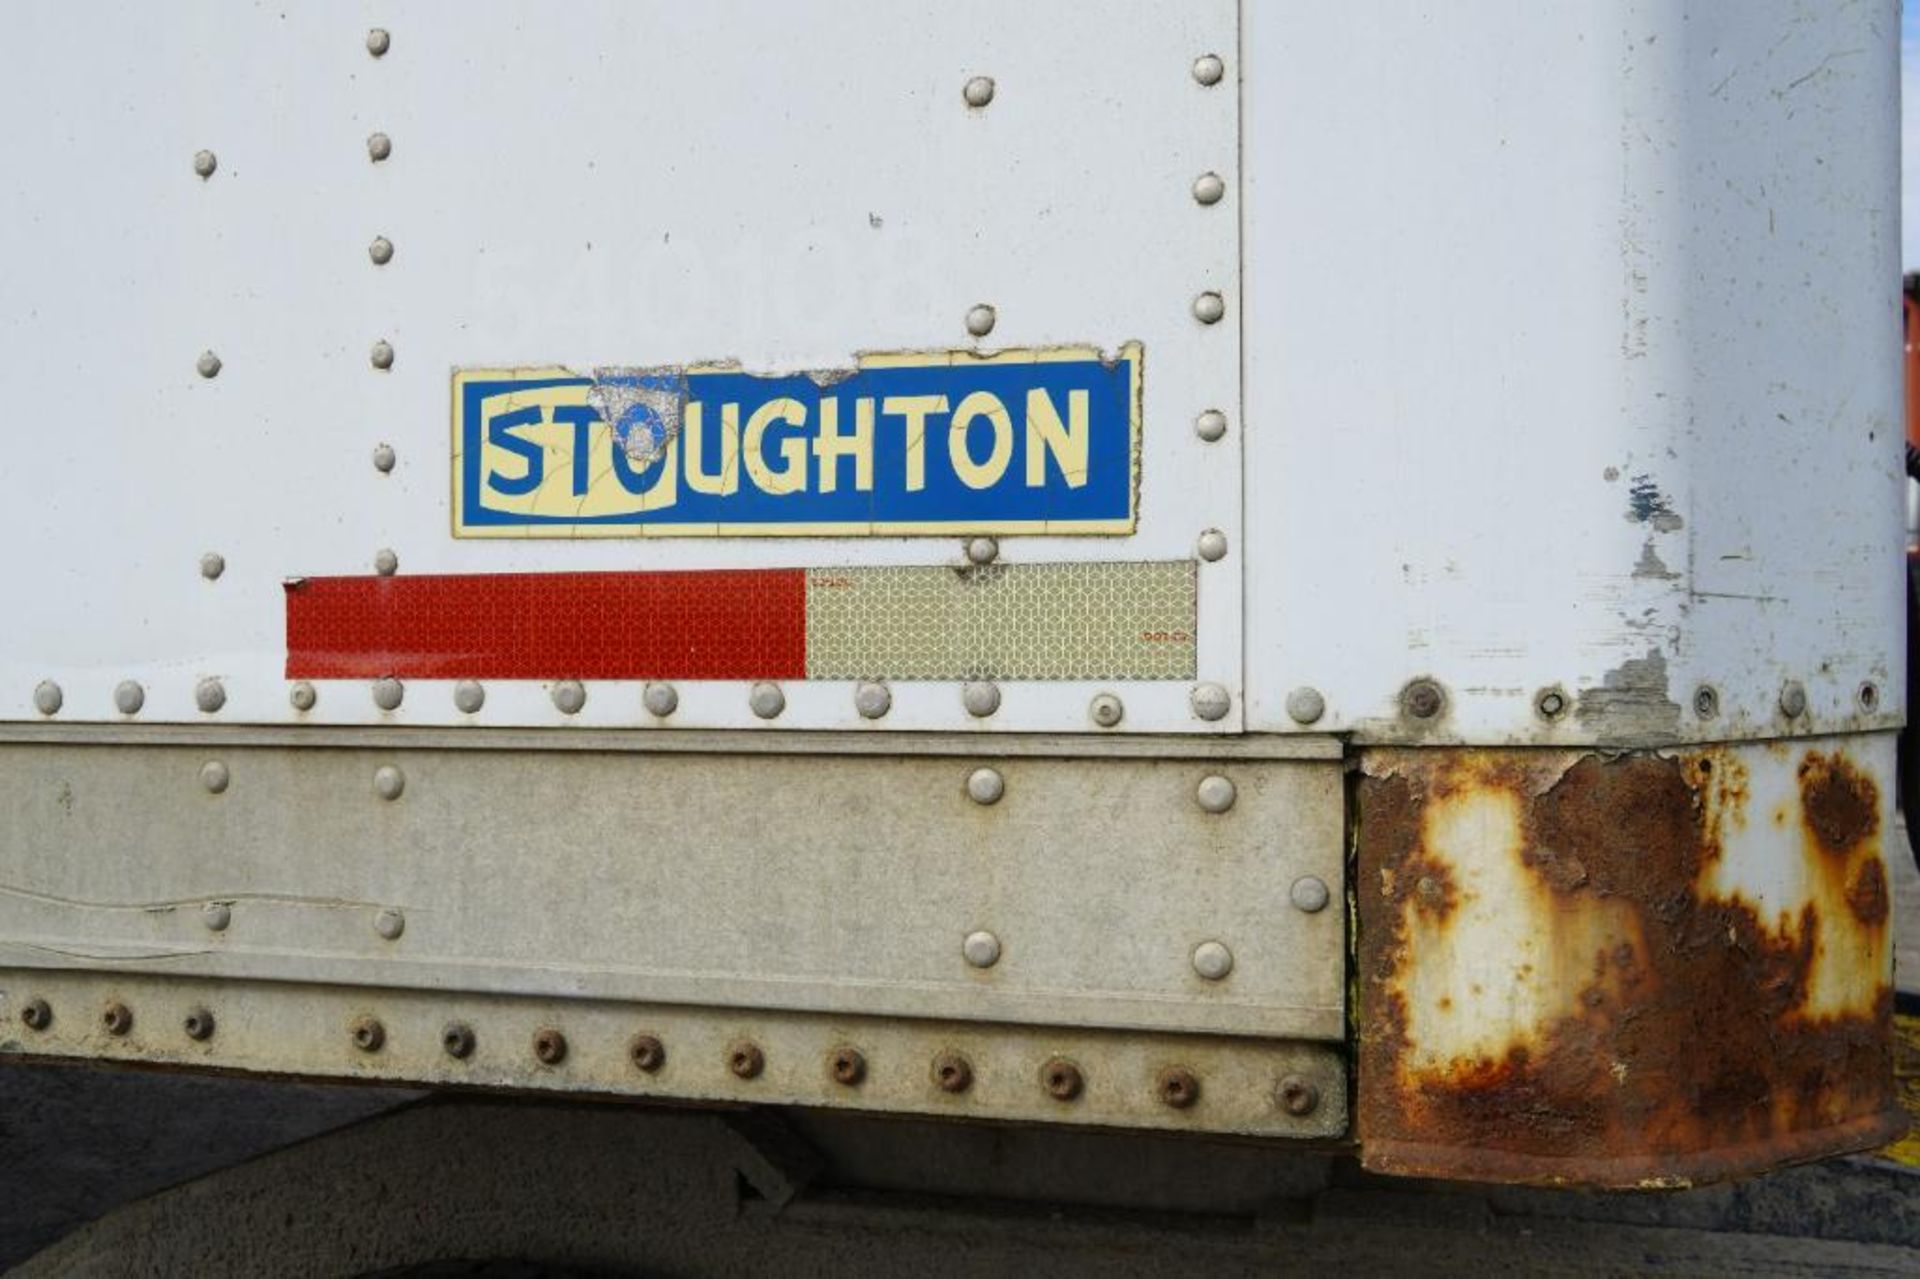 2001 Stoughton Trailers Van Trailer - Image 28 of 29